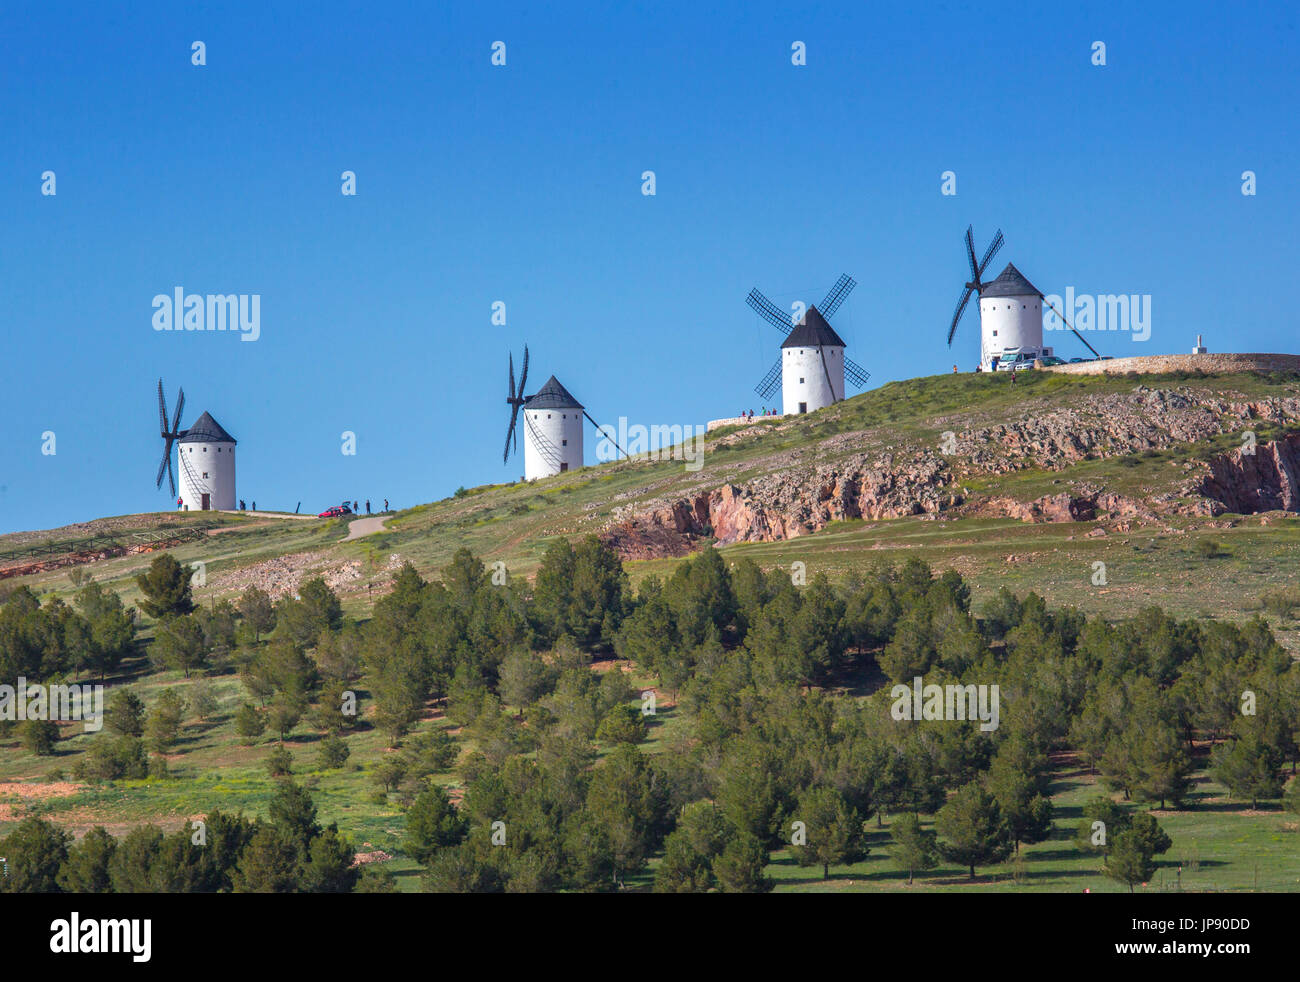 Spain, La Mancha region, campo de criptana area, Windmills, Stock Photo